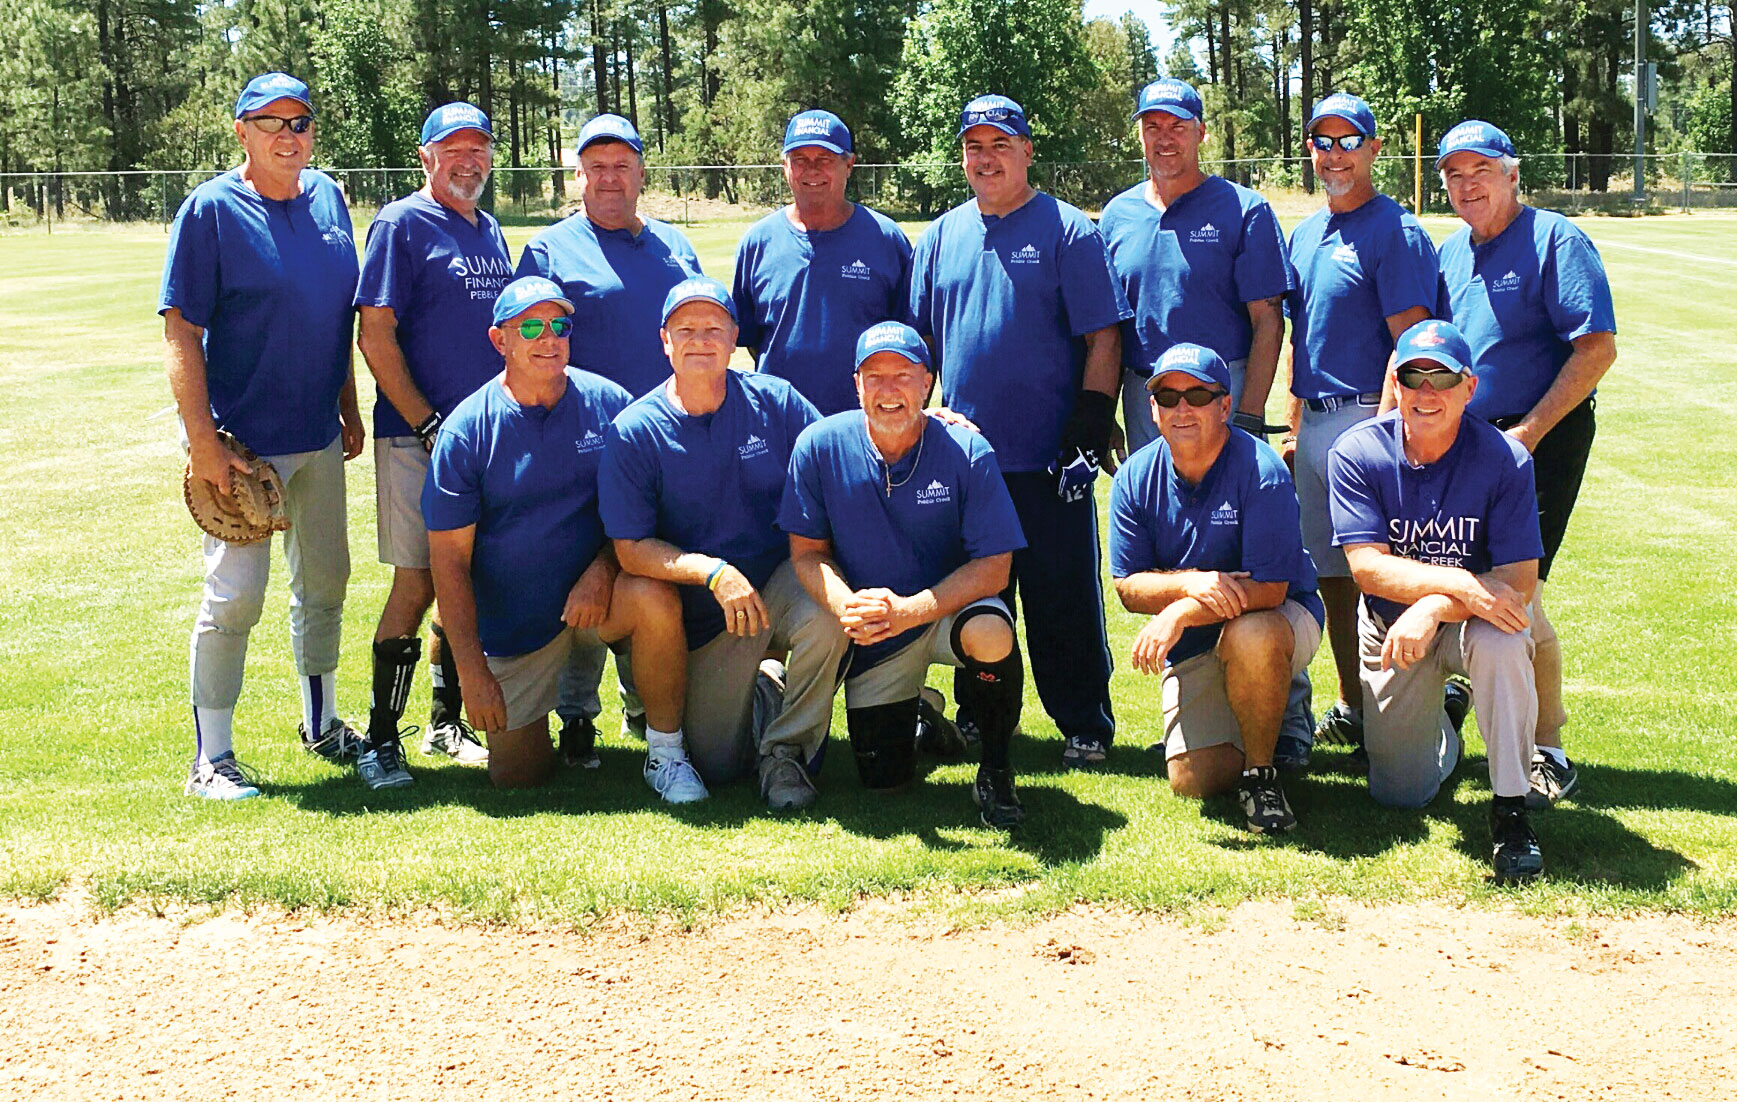 PebbleCreek’s B Division Softball Championship Team - Pinetop, Arizona, June 19, 2016